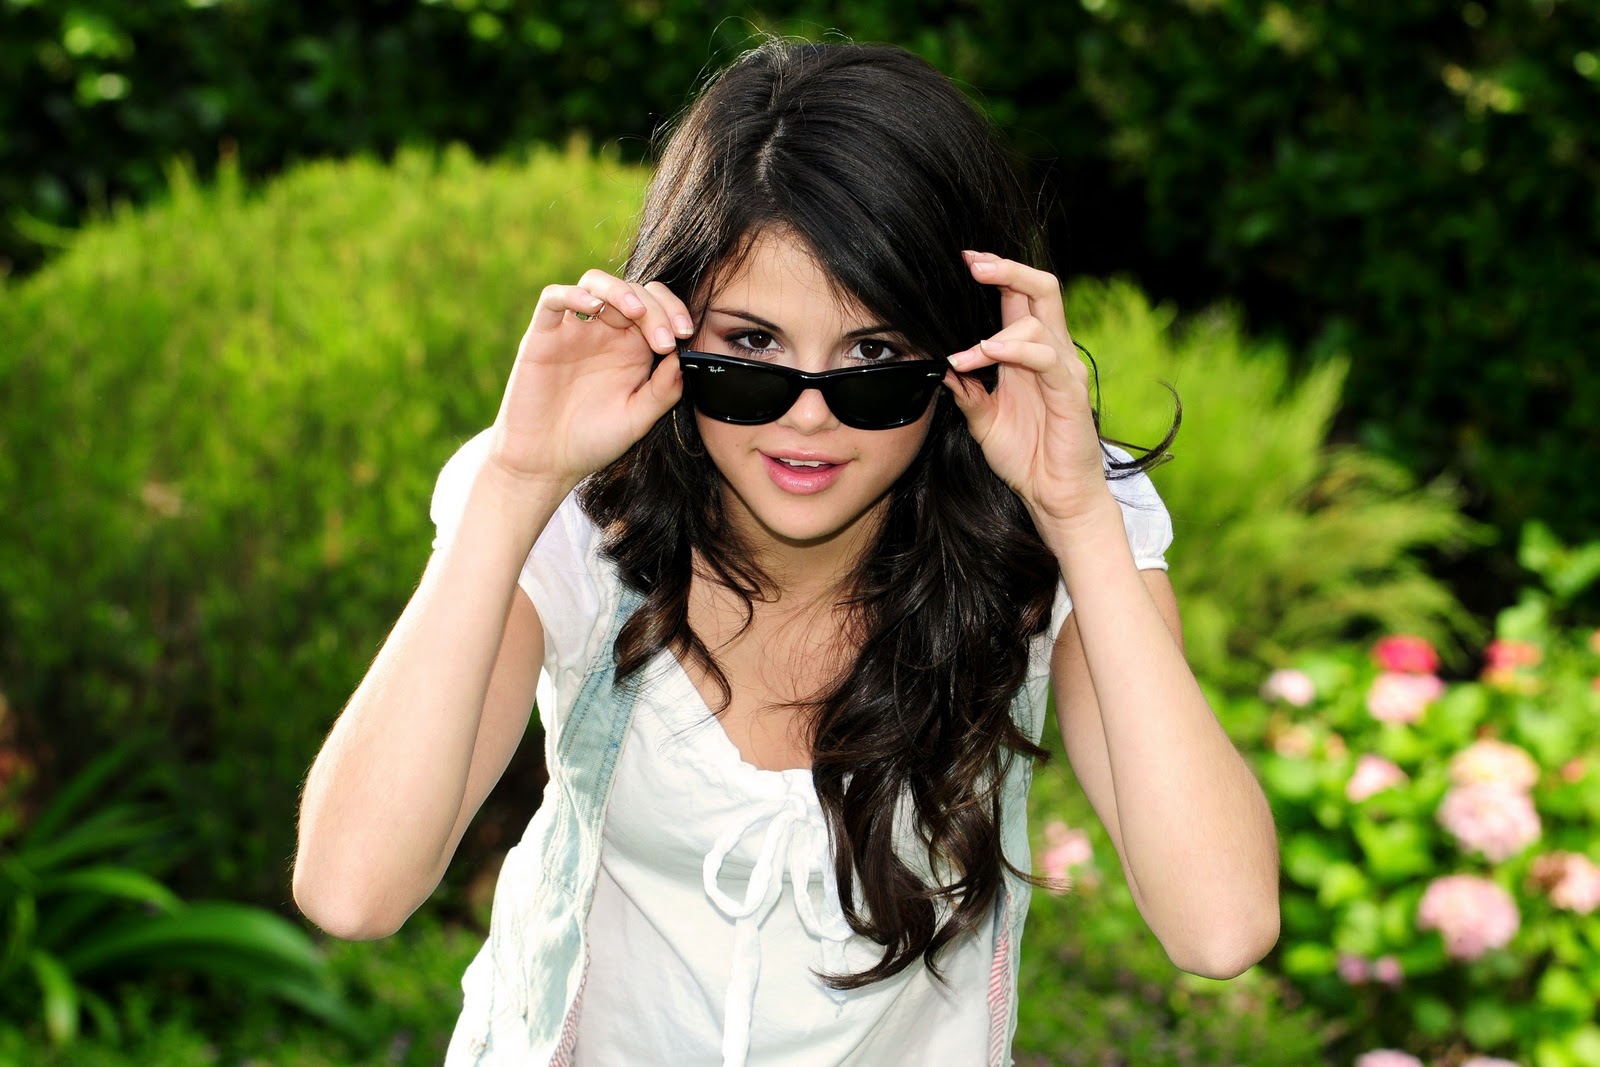 Wallpapers free downloads - hhg1216: Selena Gomez photoshoot - Selena ...